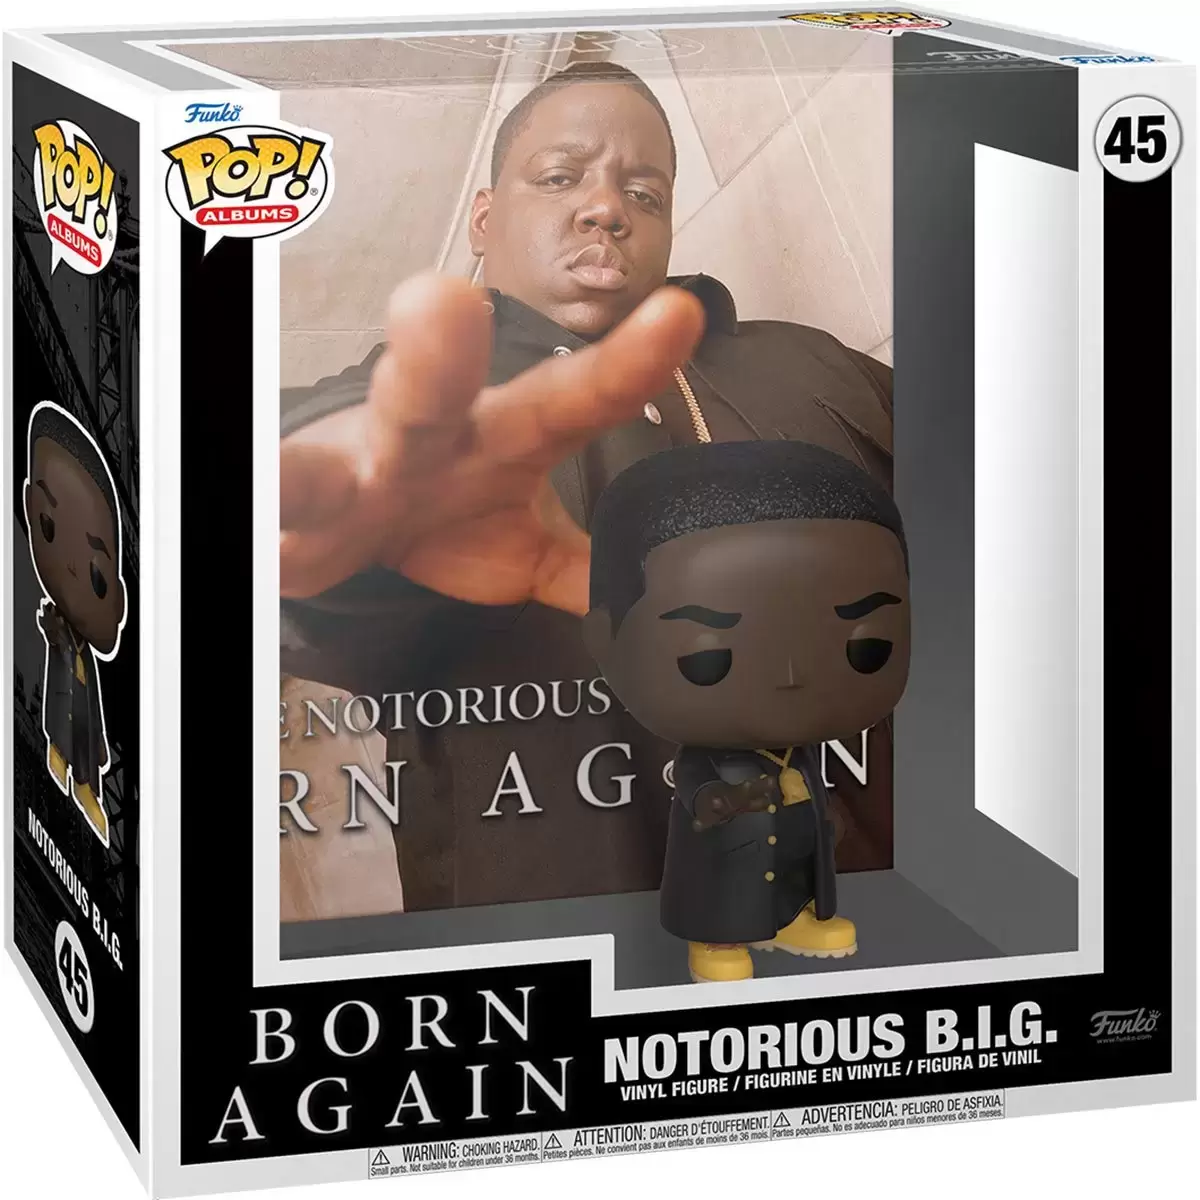 POP! Albums - Notorious B.I.G. Born Again